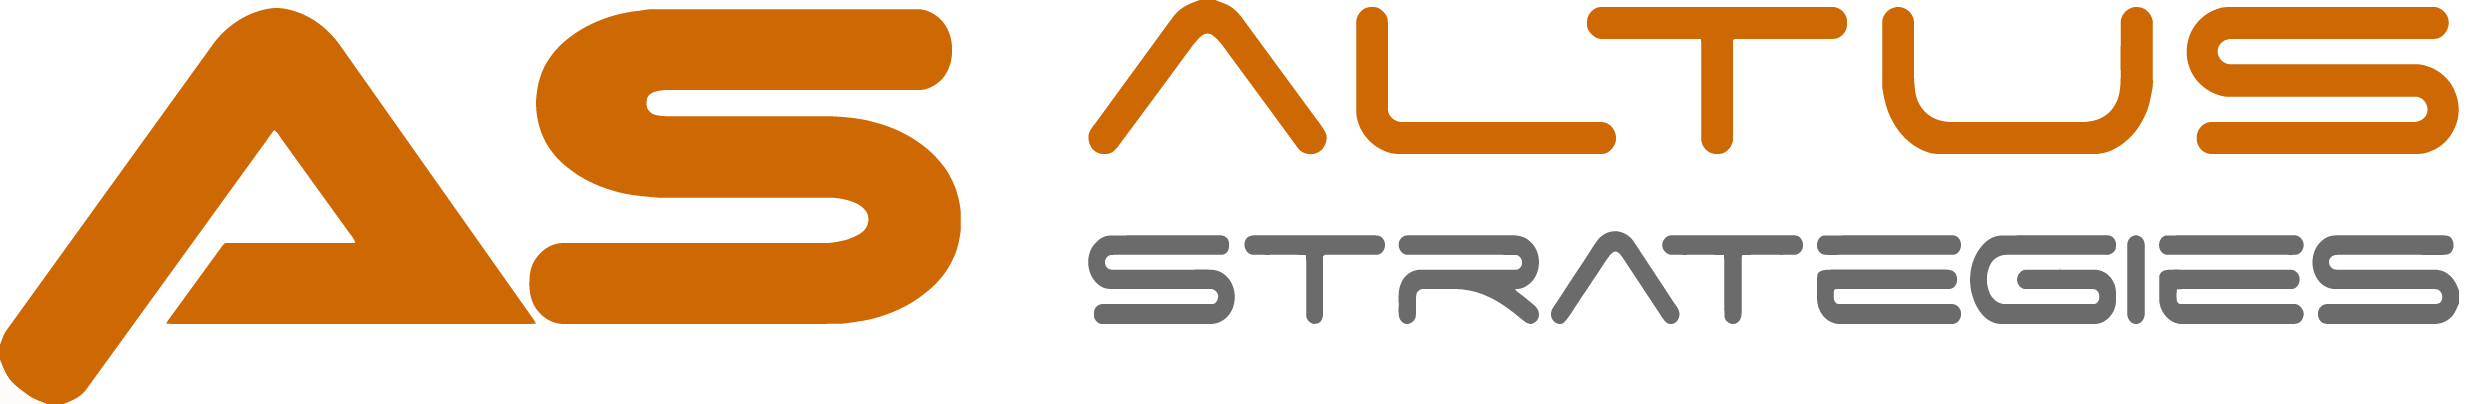 Altus Strategies Plc, Wednesday, September 23, 2020, Press release picture